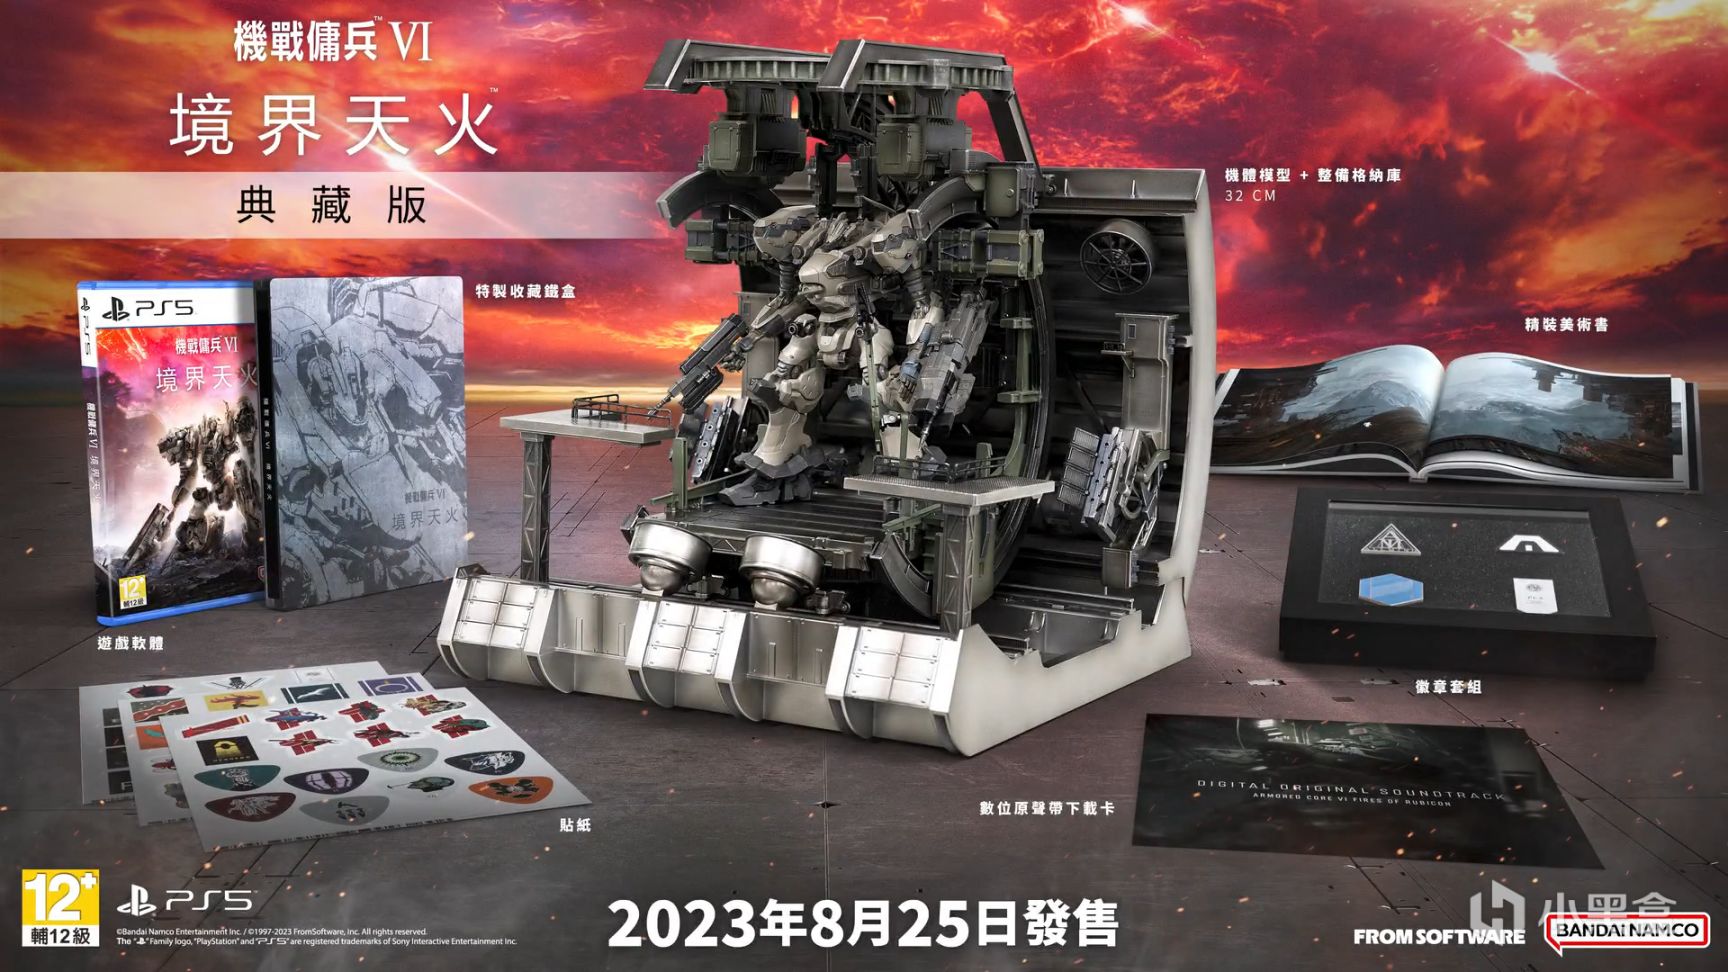 【PC游戏】宫崎英高新作《装甲核心6 境界天火》开启预购国区售价¥298-第1张